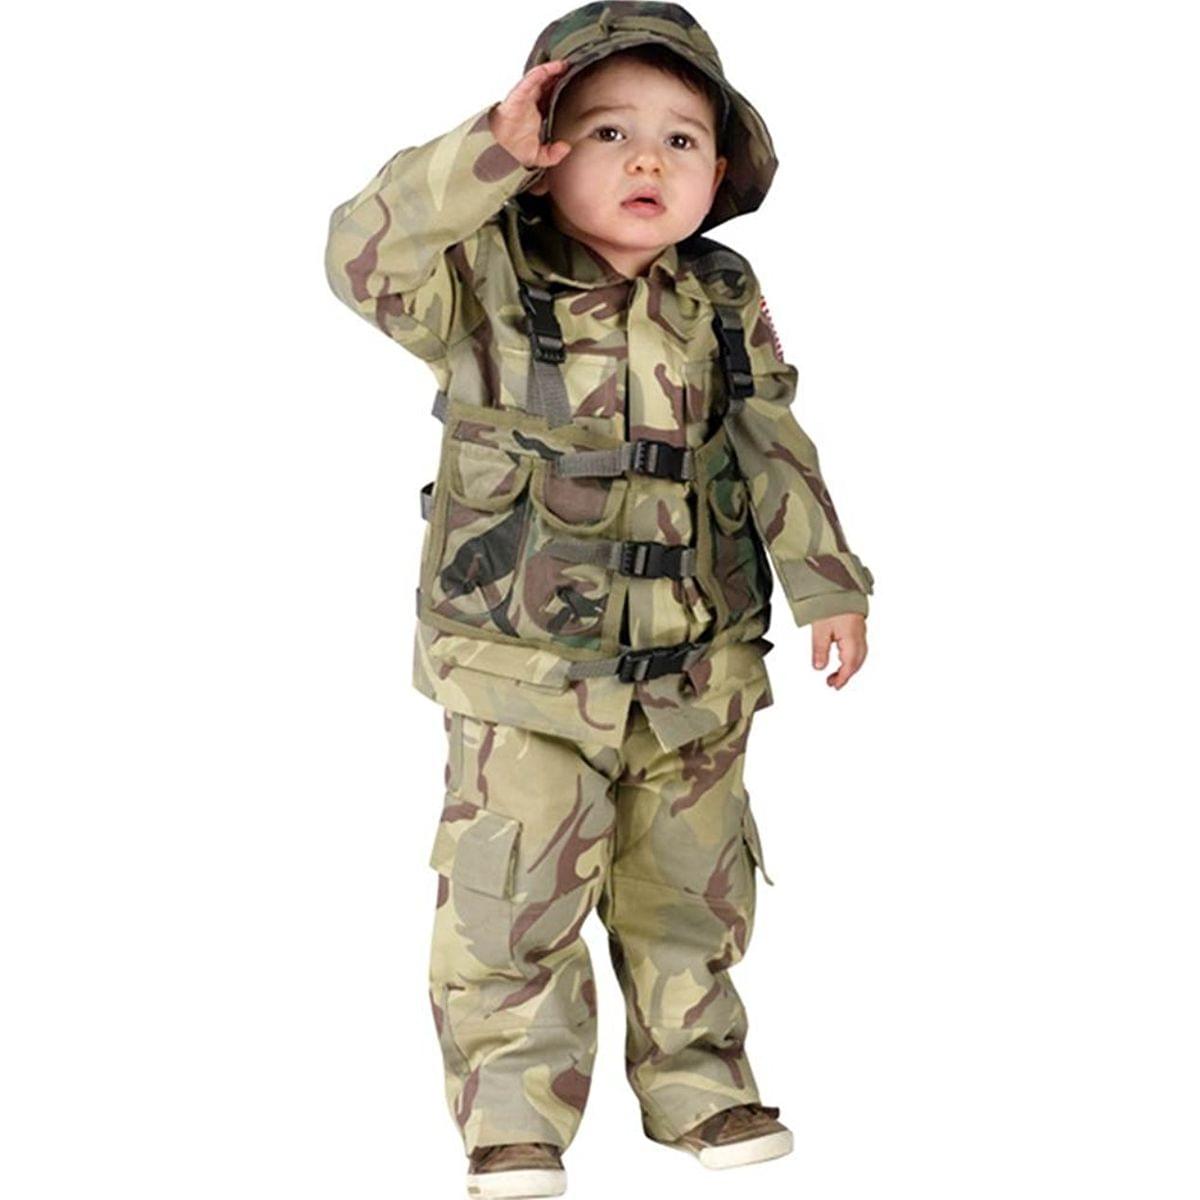 Delta Force Authentic Child Costume